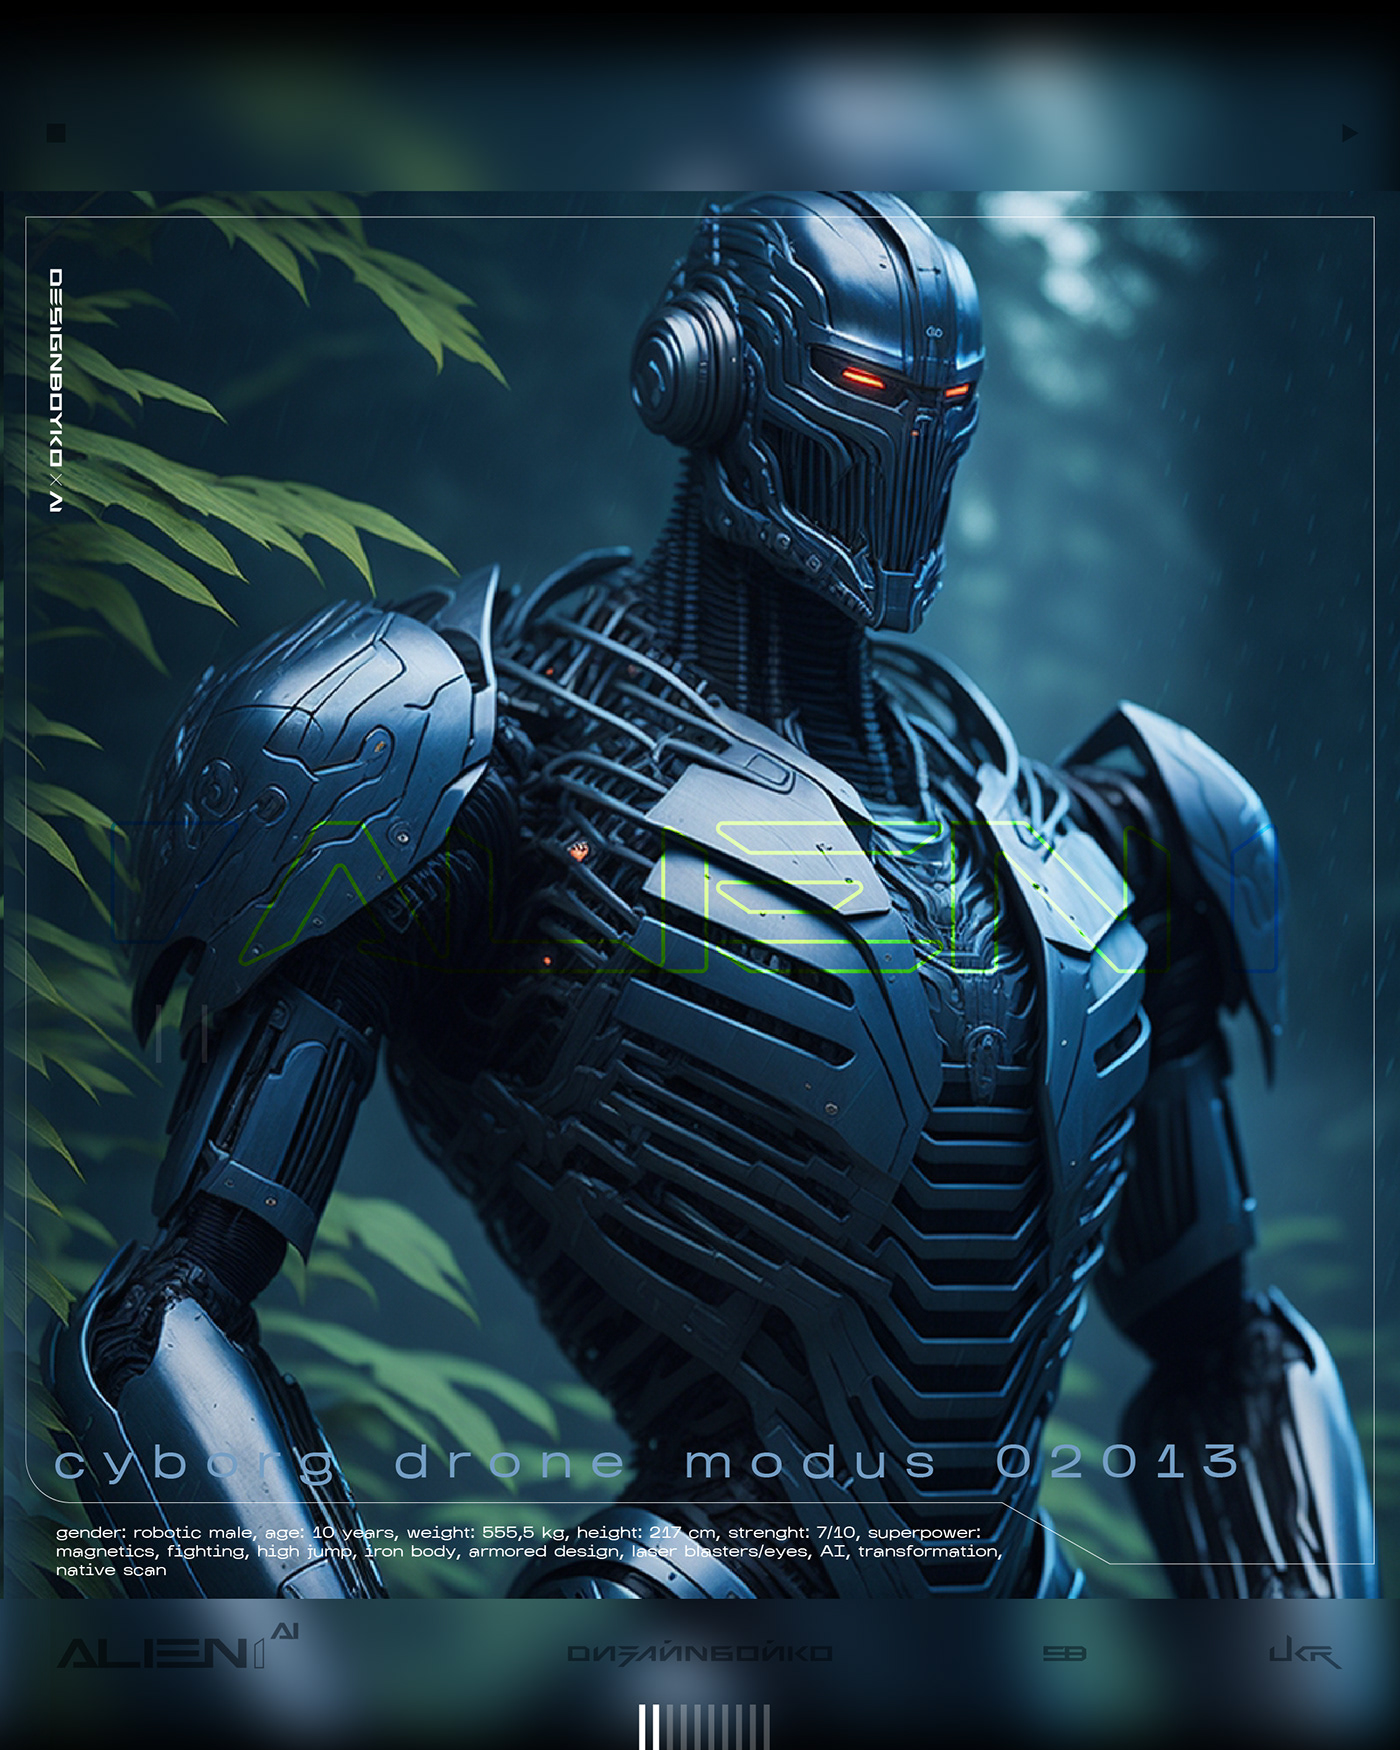 Logo Design artificial intelligence background mixing Character design  ILLUSTRATION  robots cyborgs Scifi concept art